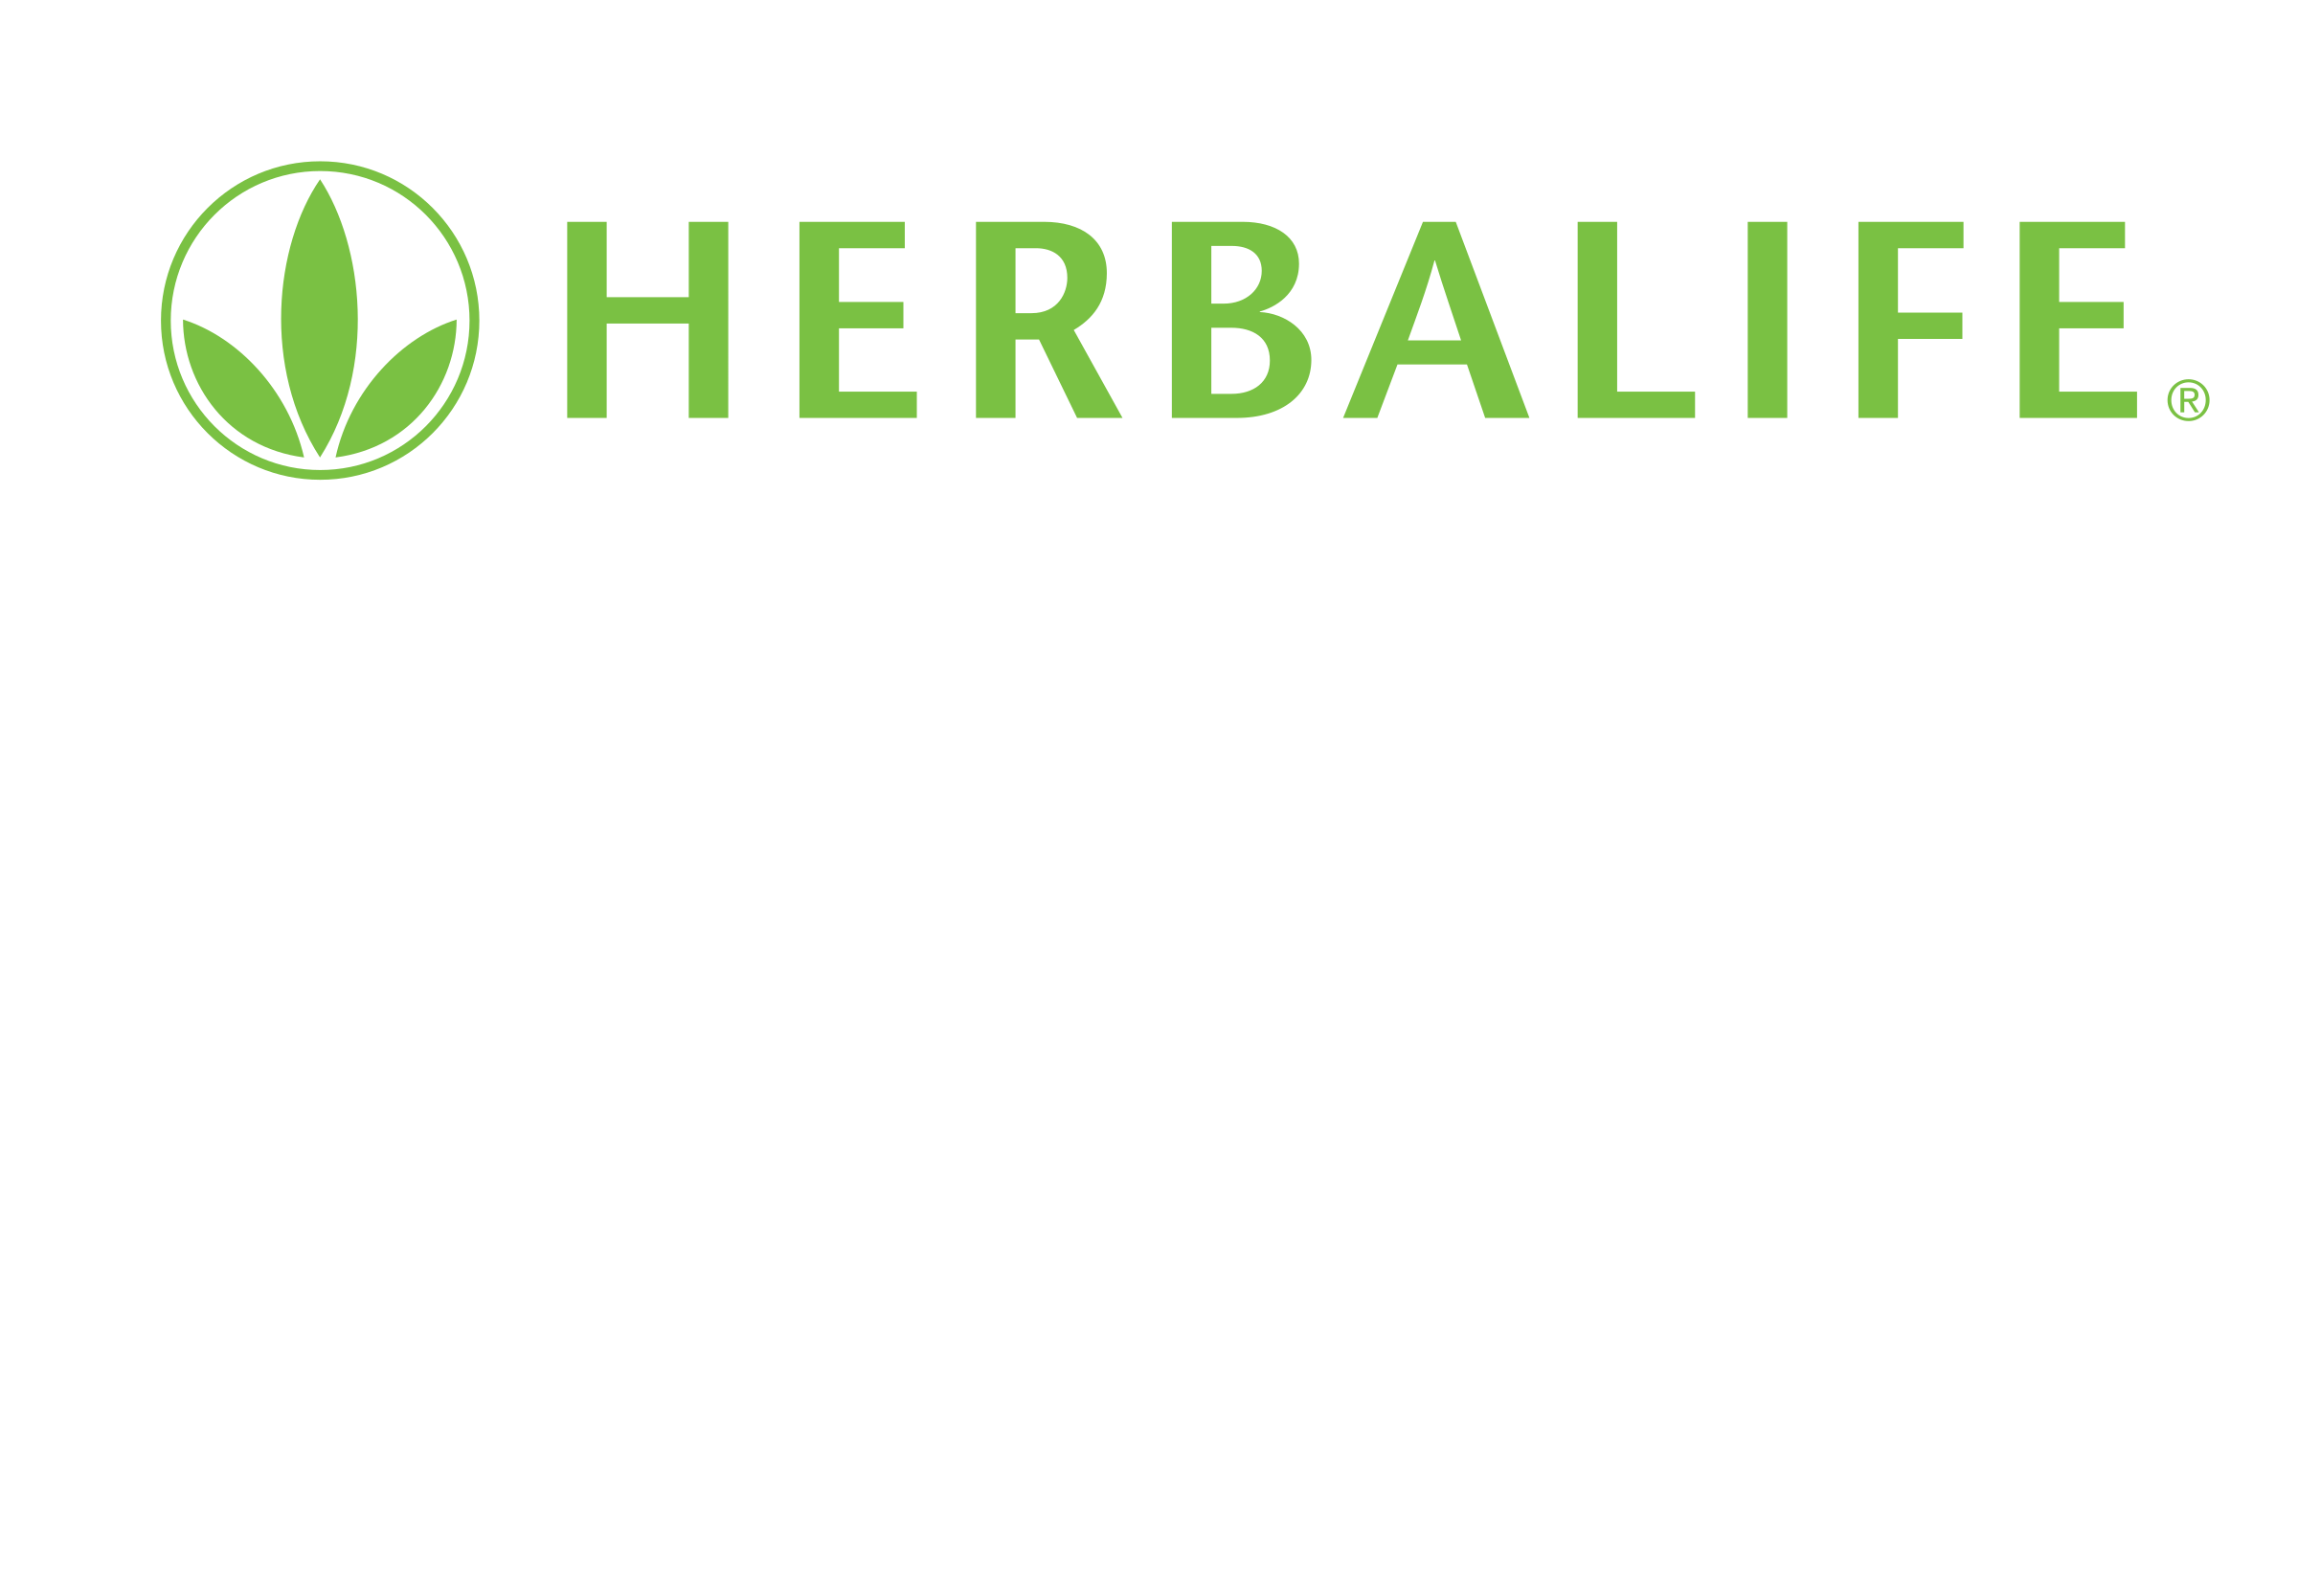 Herbalife Logo - Herbalife Logo PNG Transparent & SVG Vector - Freebie Supply